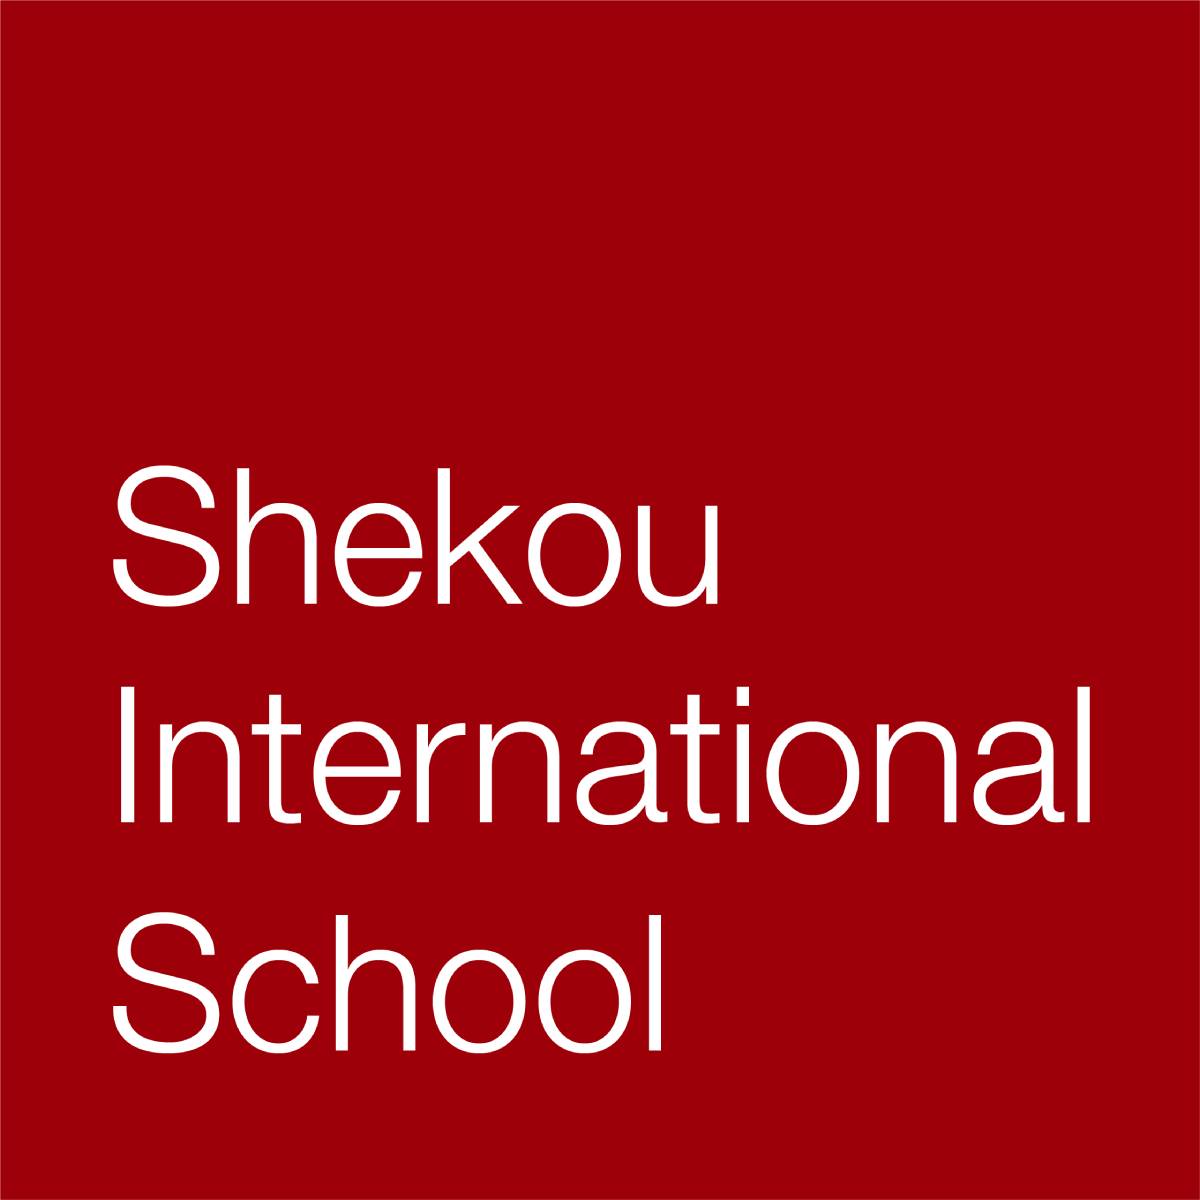 Featured image for “Shekou International School (SIS)”